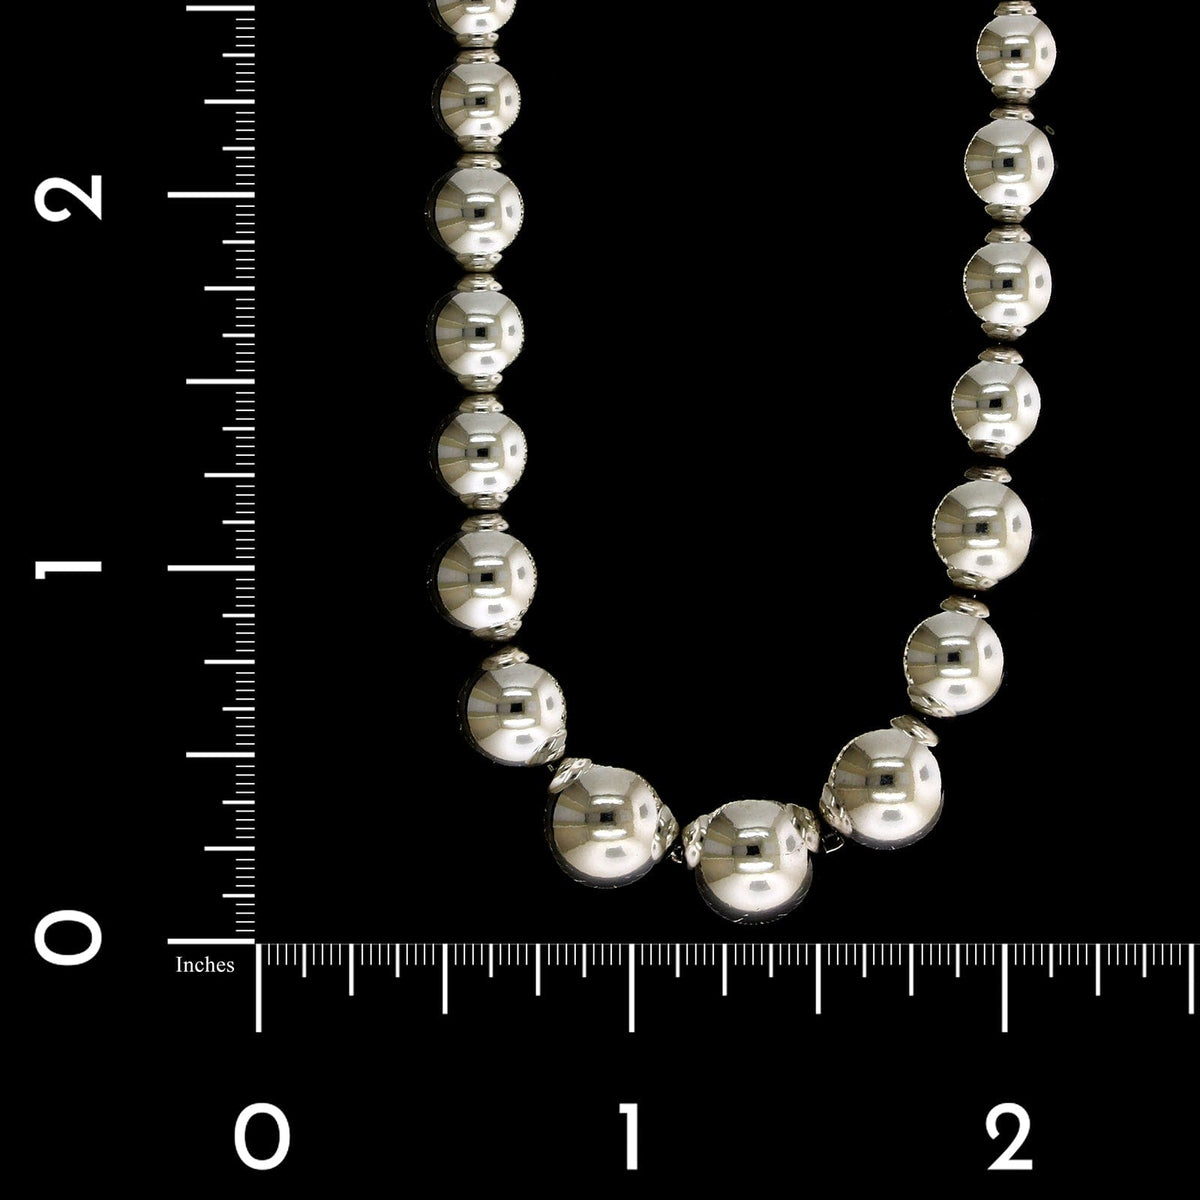 Tiffany & Co. Sterling Silver Estate Hardwear Graduated Ball Necklace